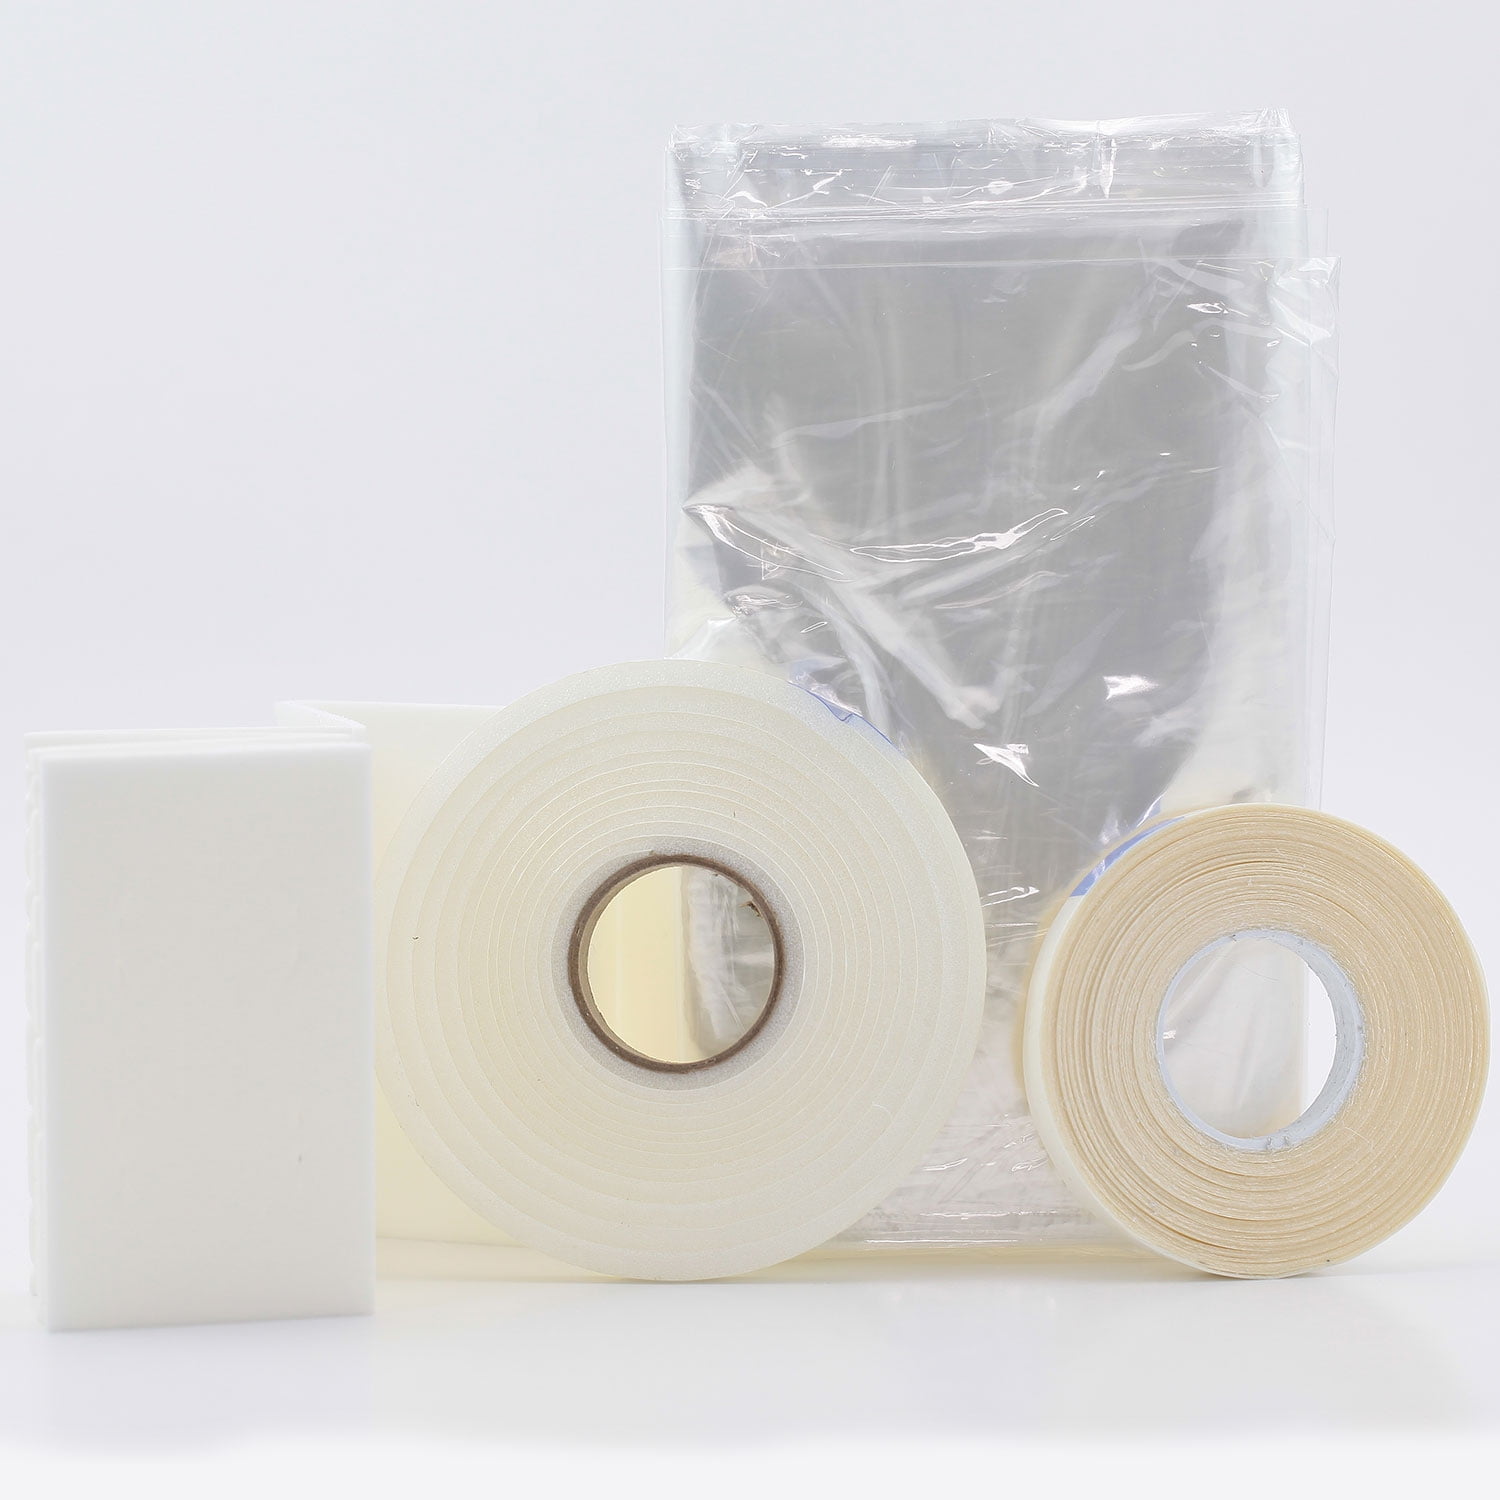 Window Insulation Film Kit Replacement Tape | Polar Bear Weather Stripping-  1060SPB